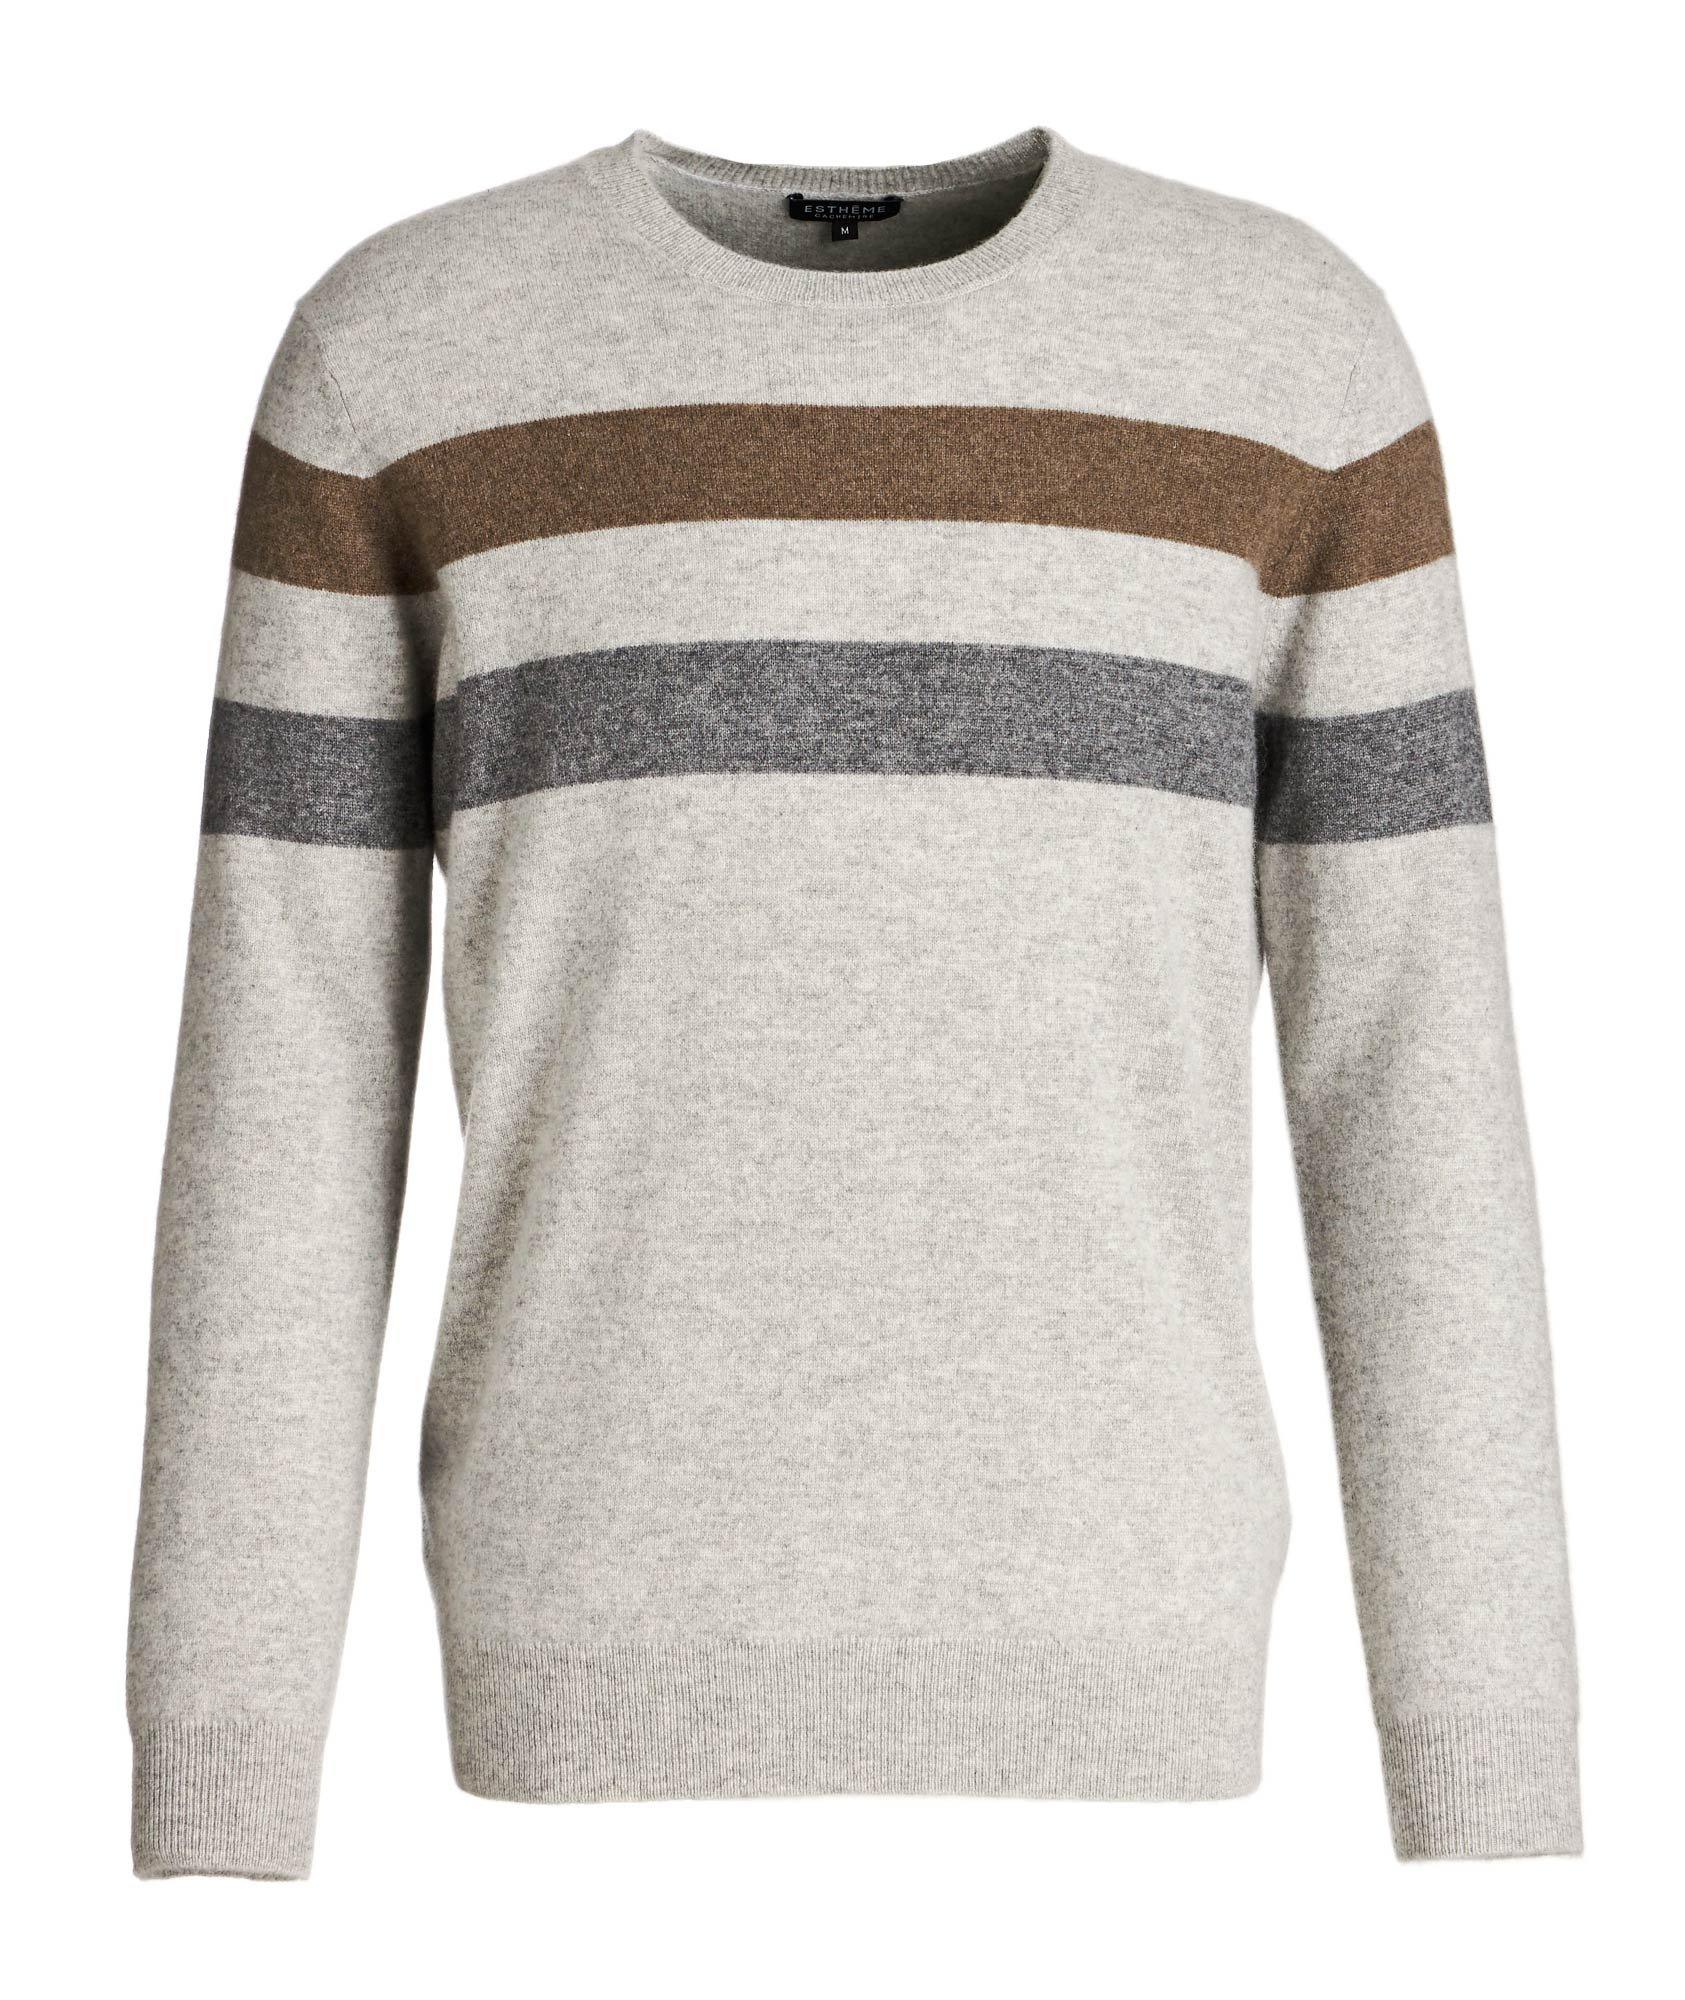 Striped Cashmere Sweater image 0